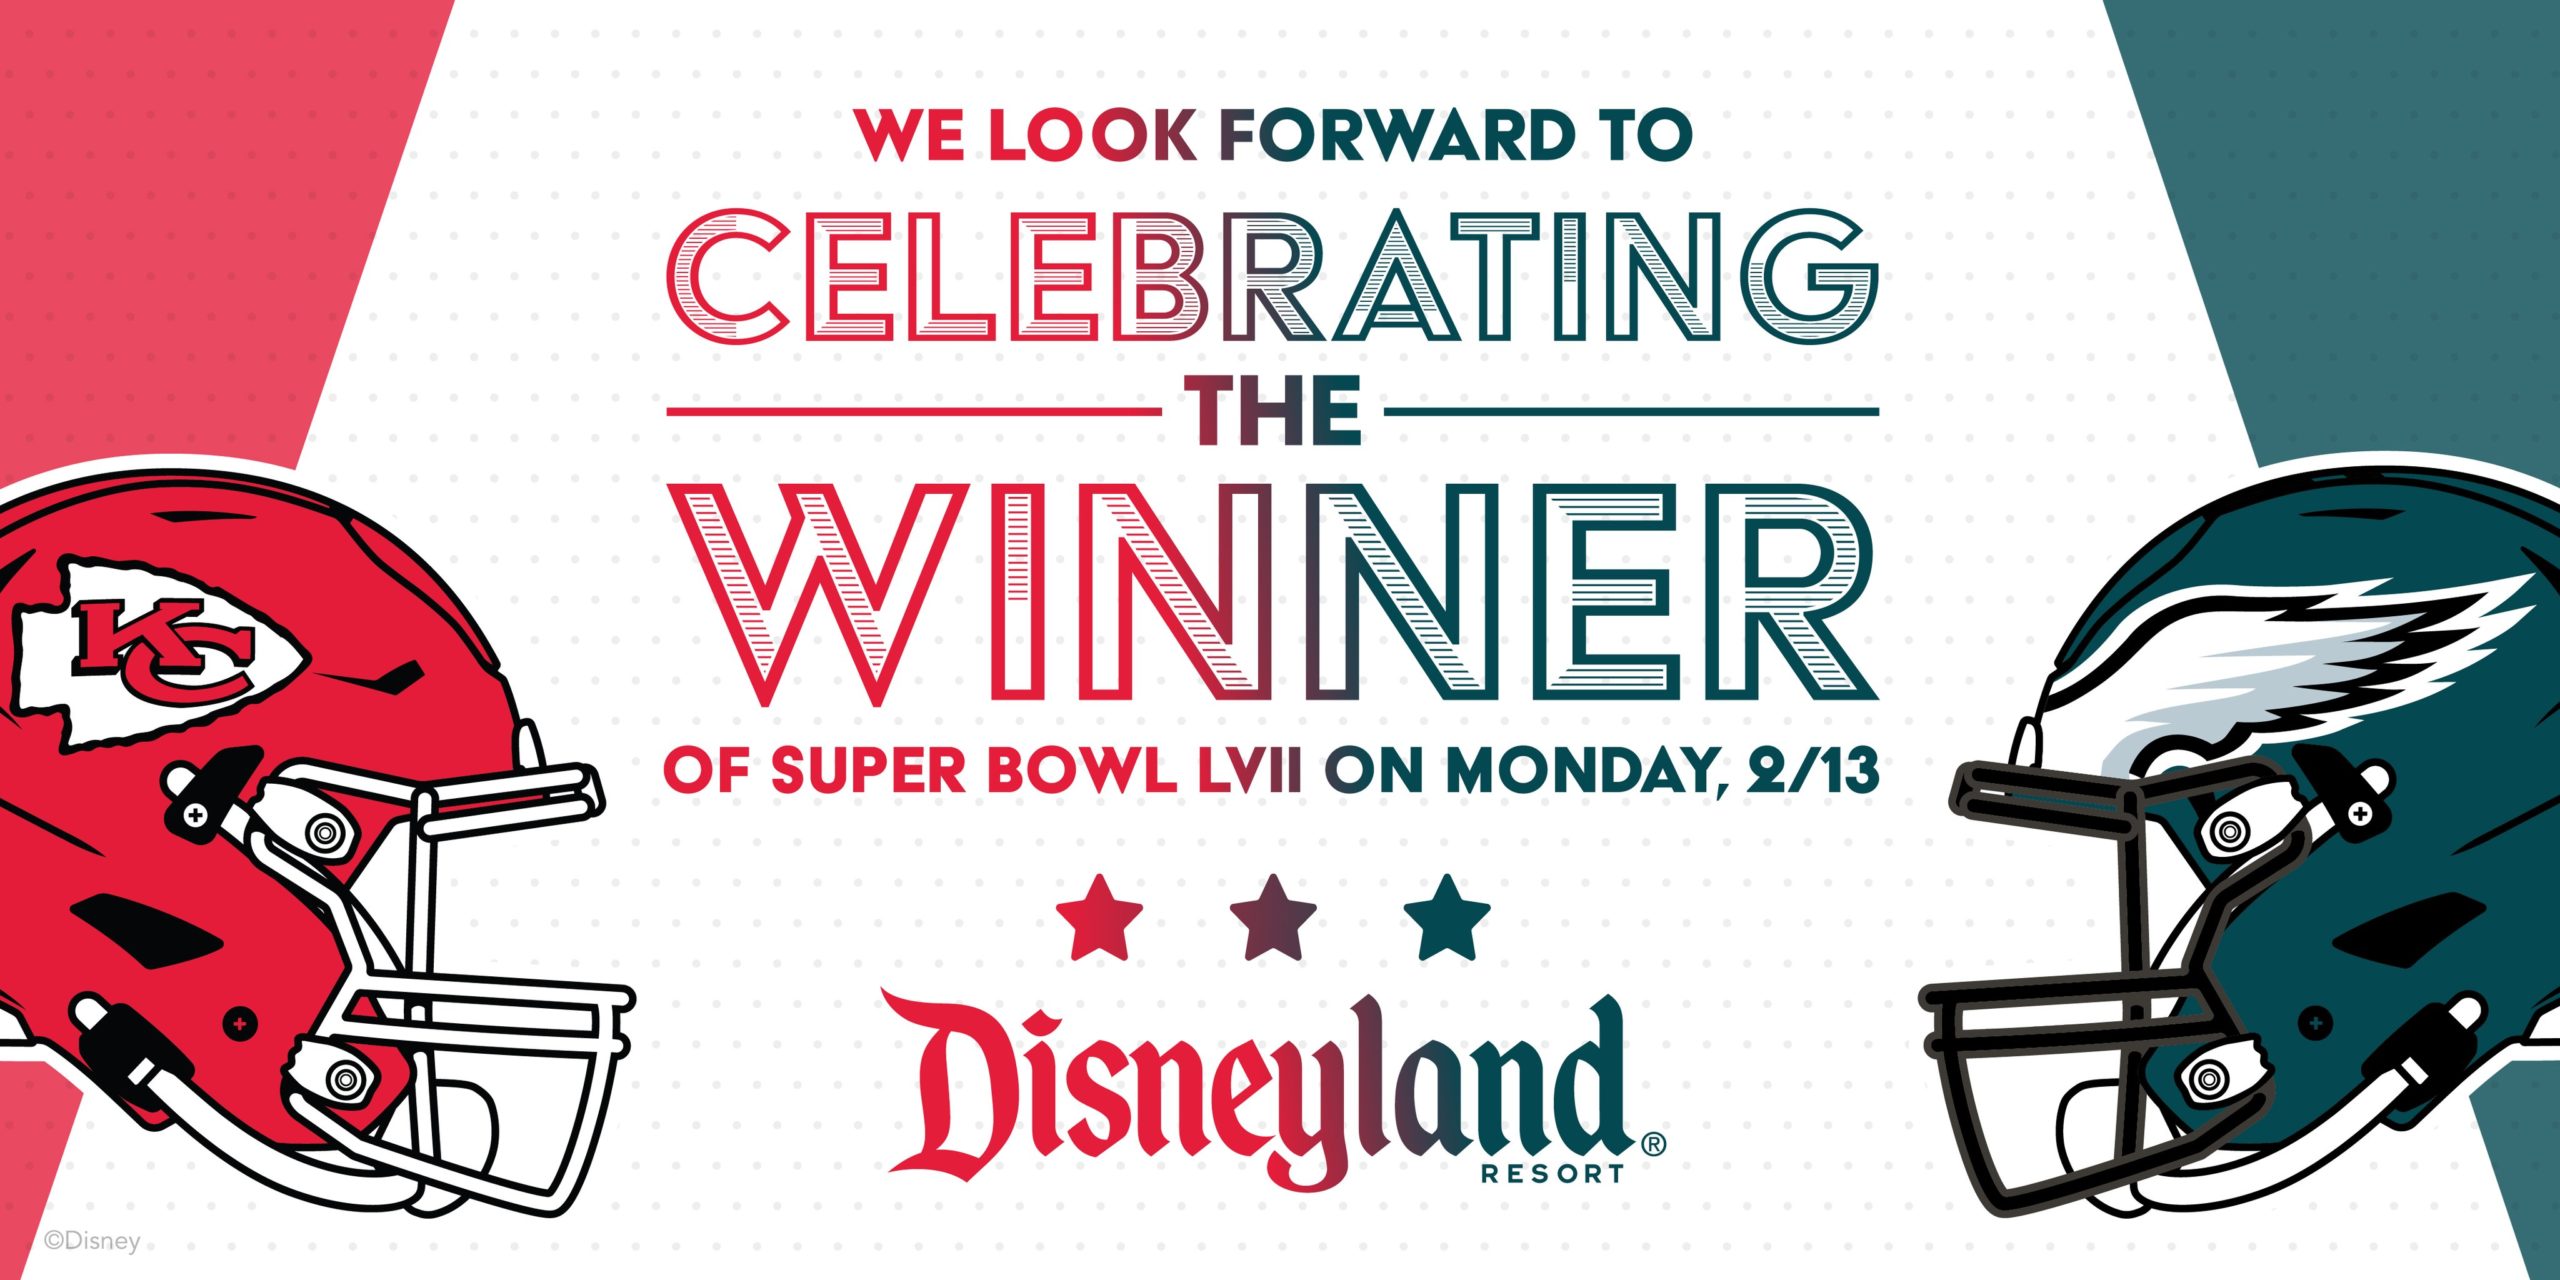 Super Bowl Celebration Disneyland 2023